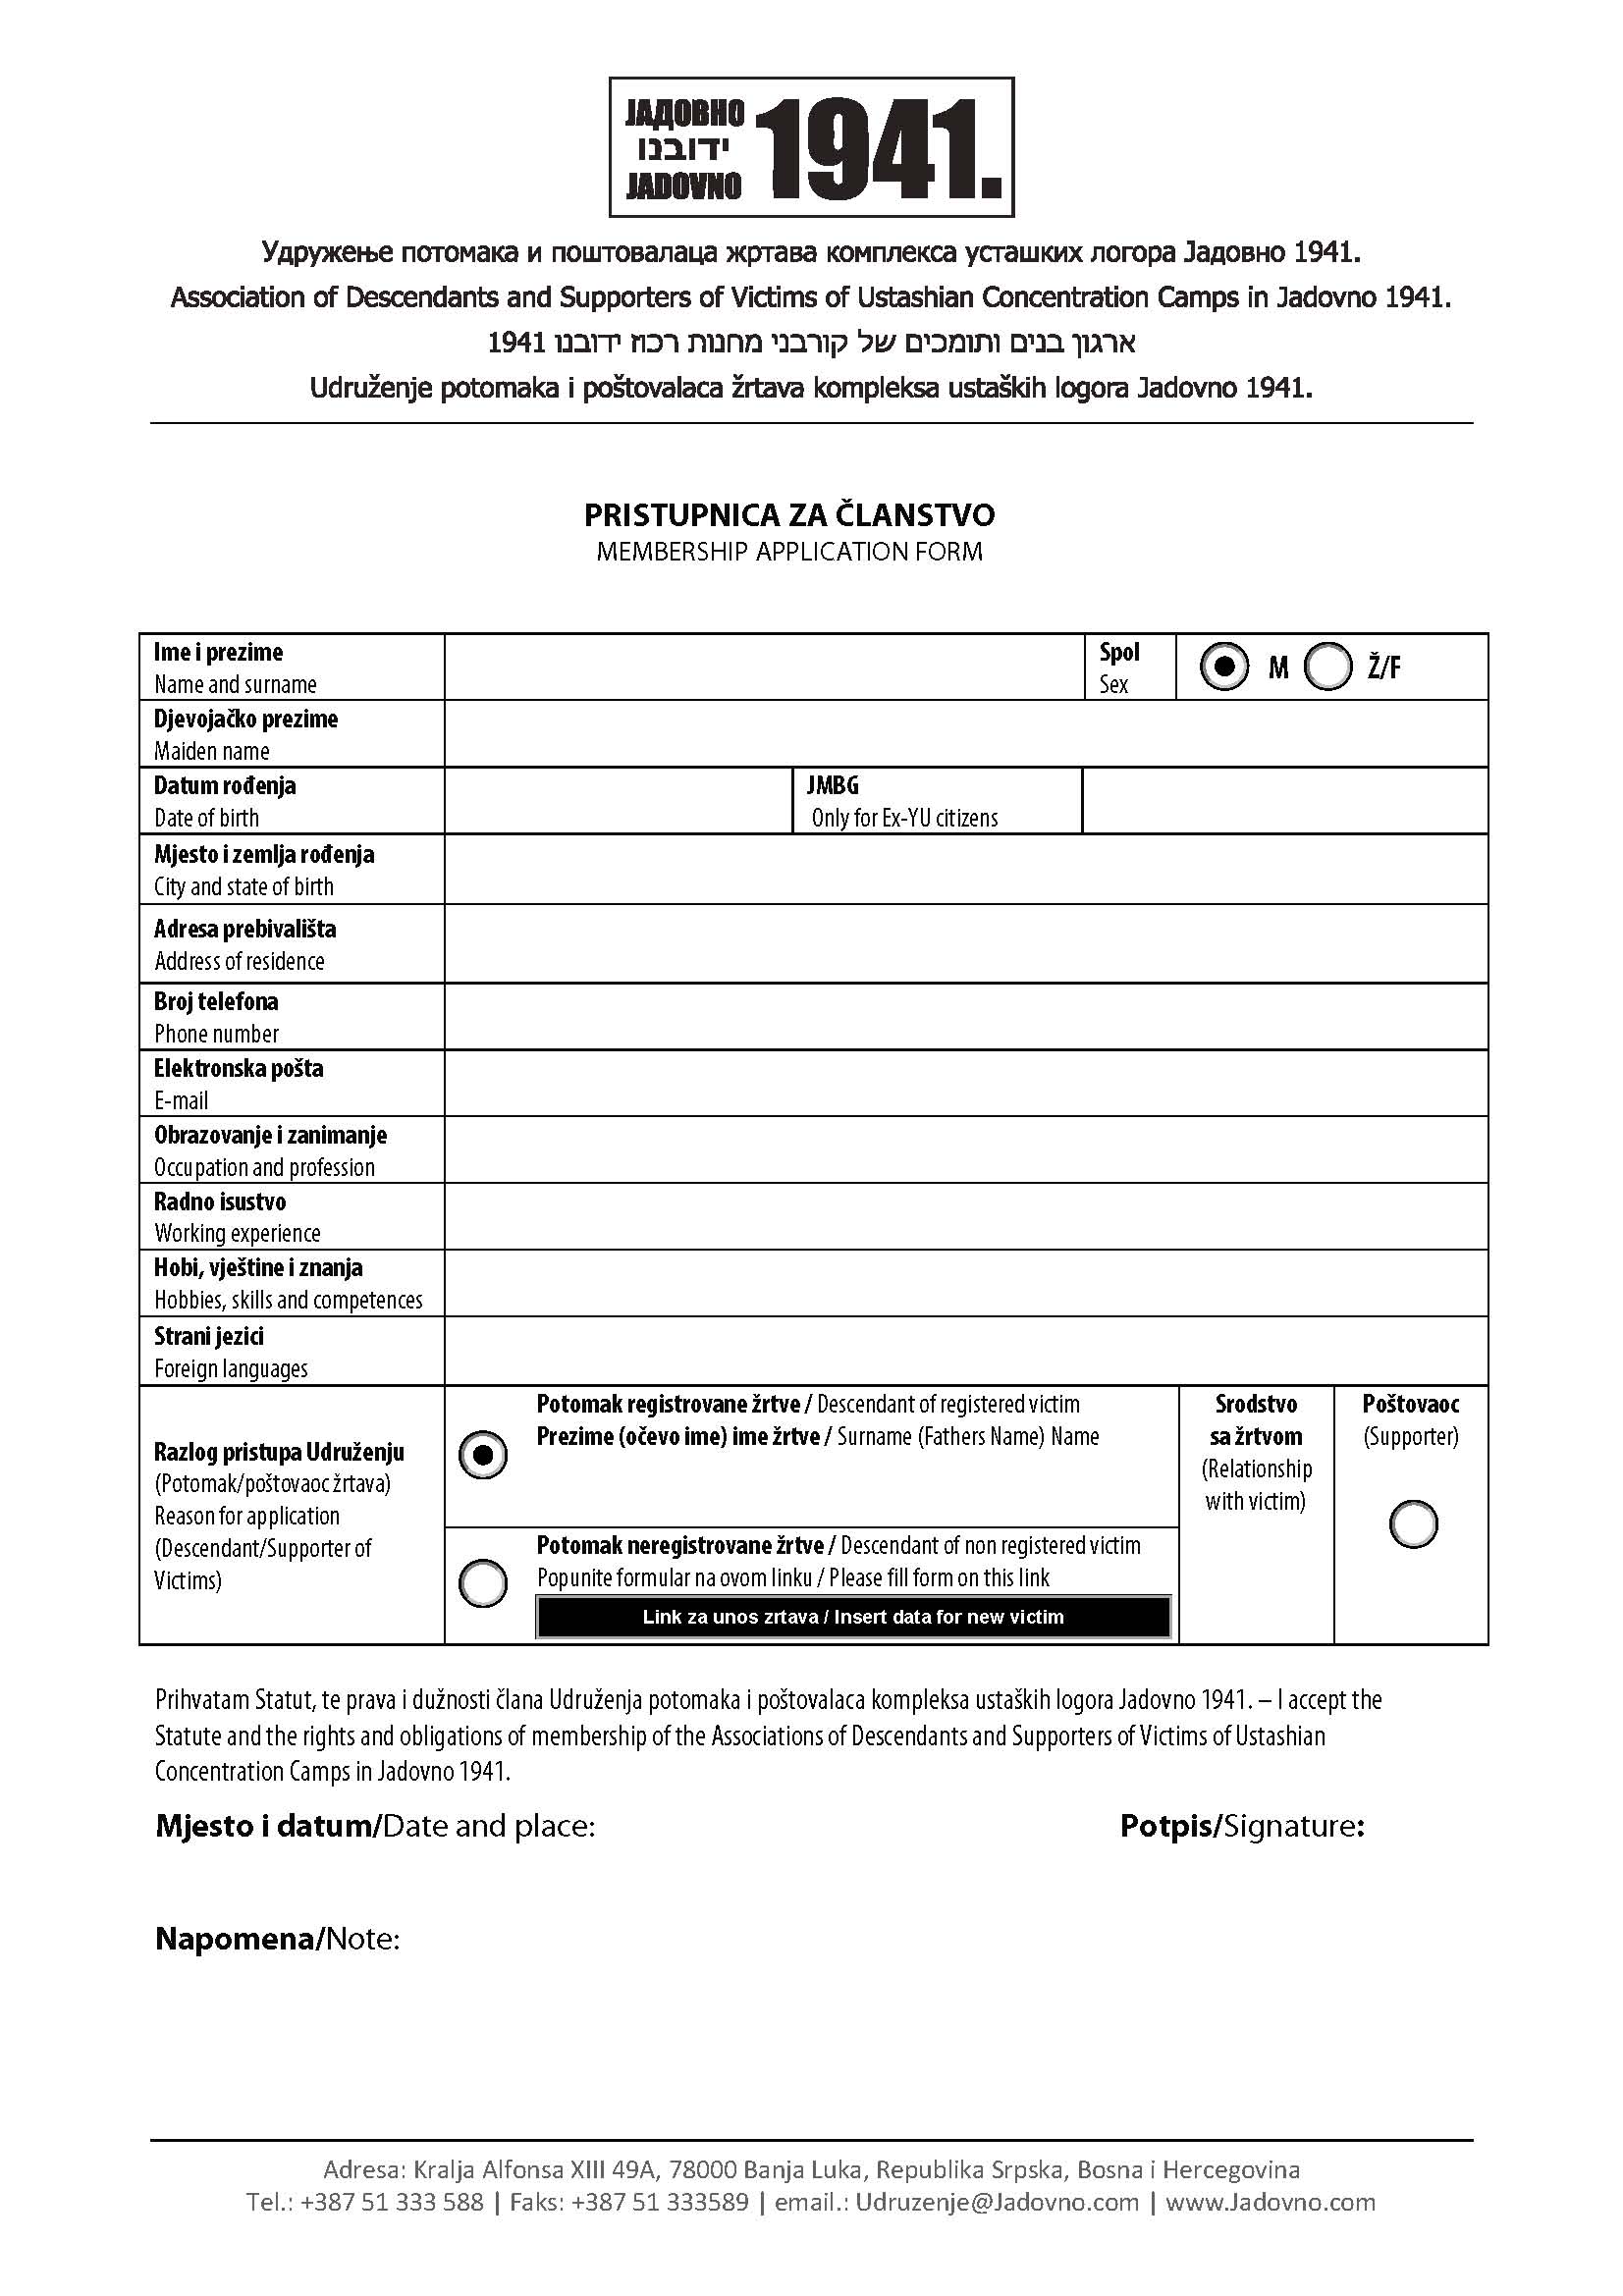 Jadovno 1941. Membership Application form